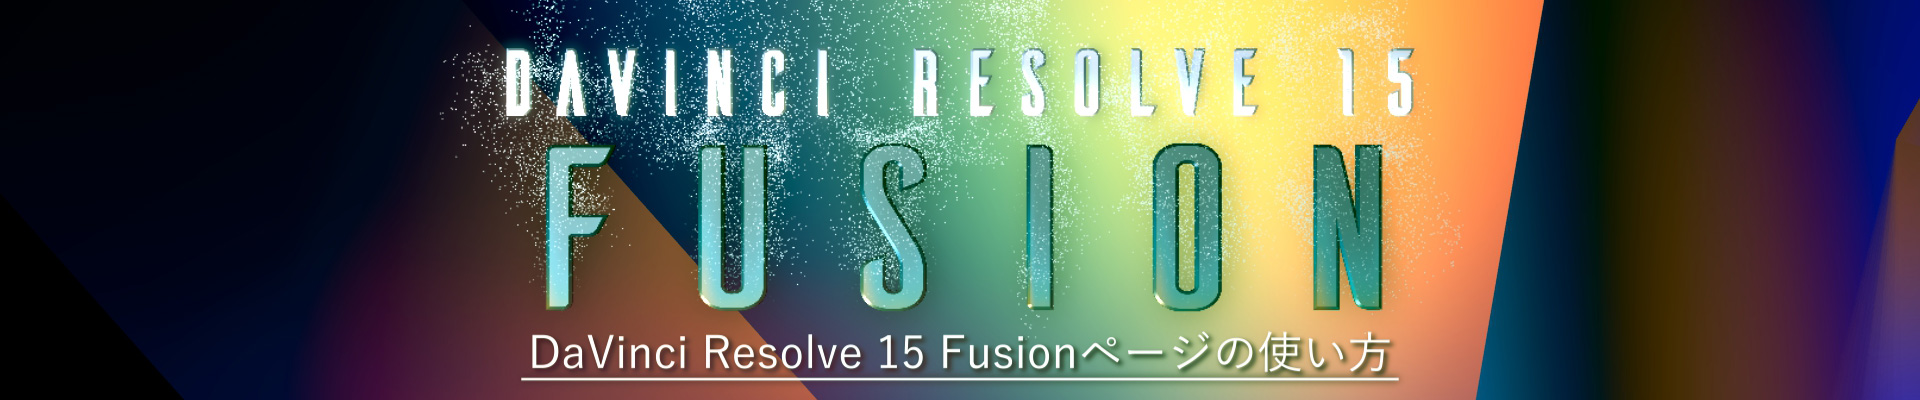 davinci resolve fusion 3d